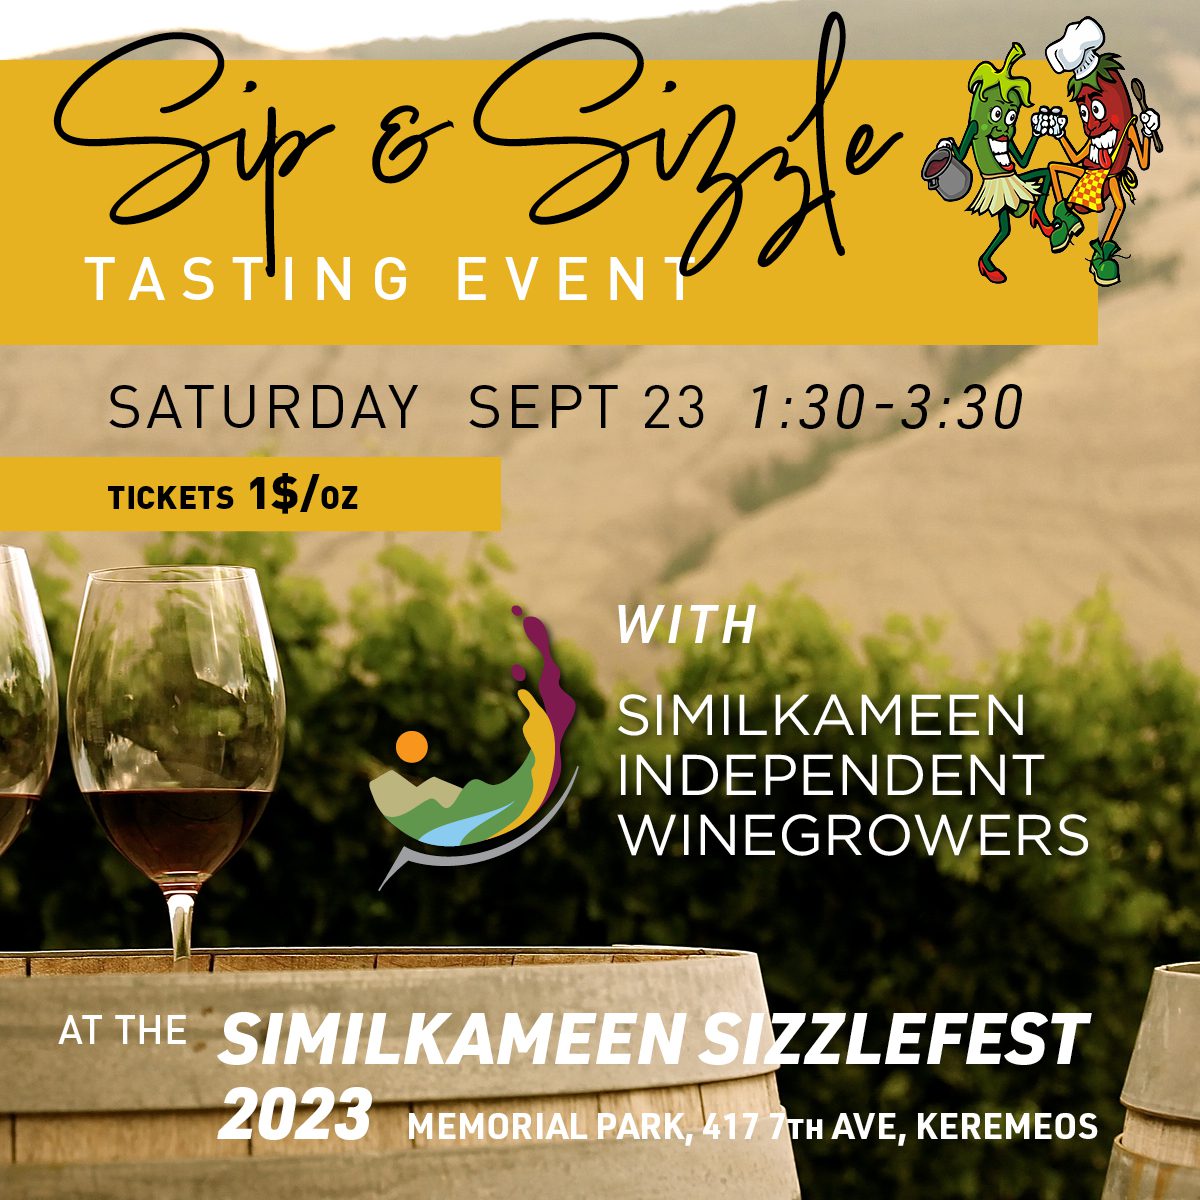 Sip & Sizzle tasting event